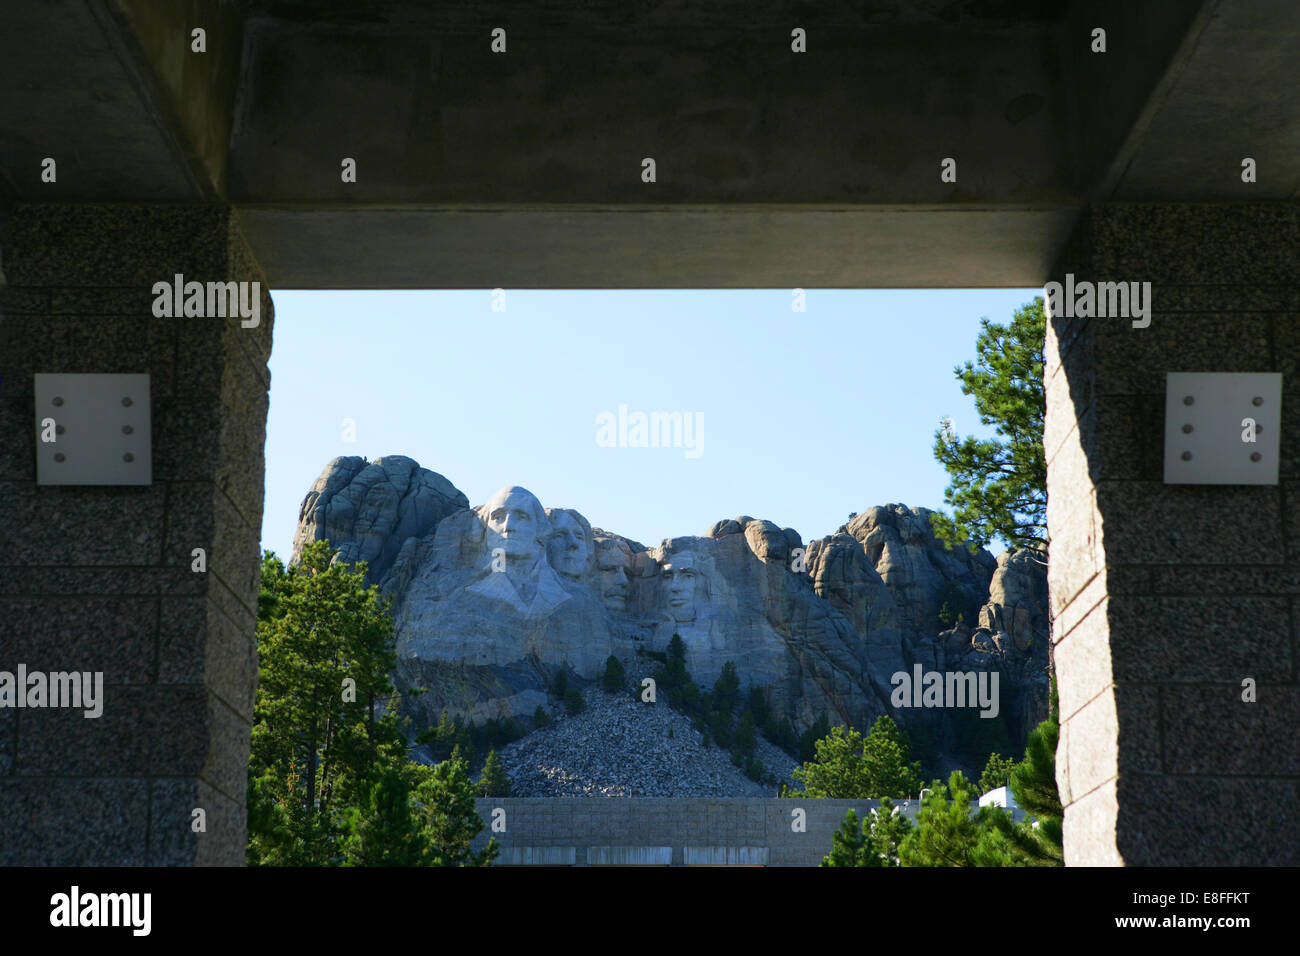 Mount Rushmore National Memorial, South Dakota, United States Stock Photo